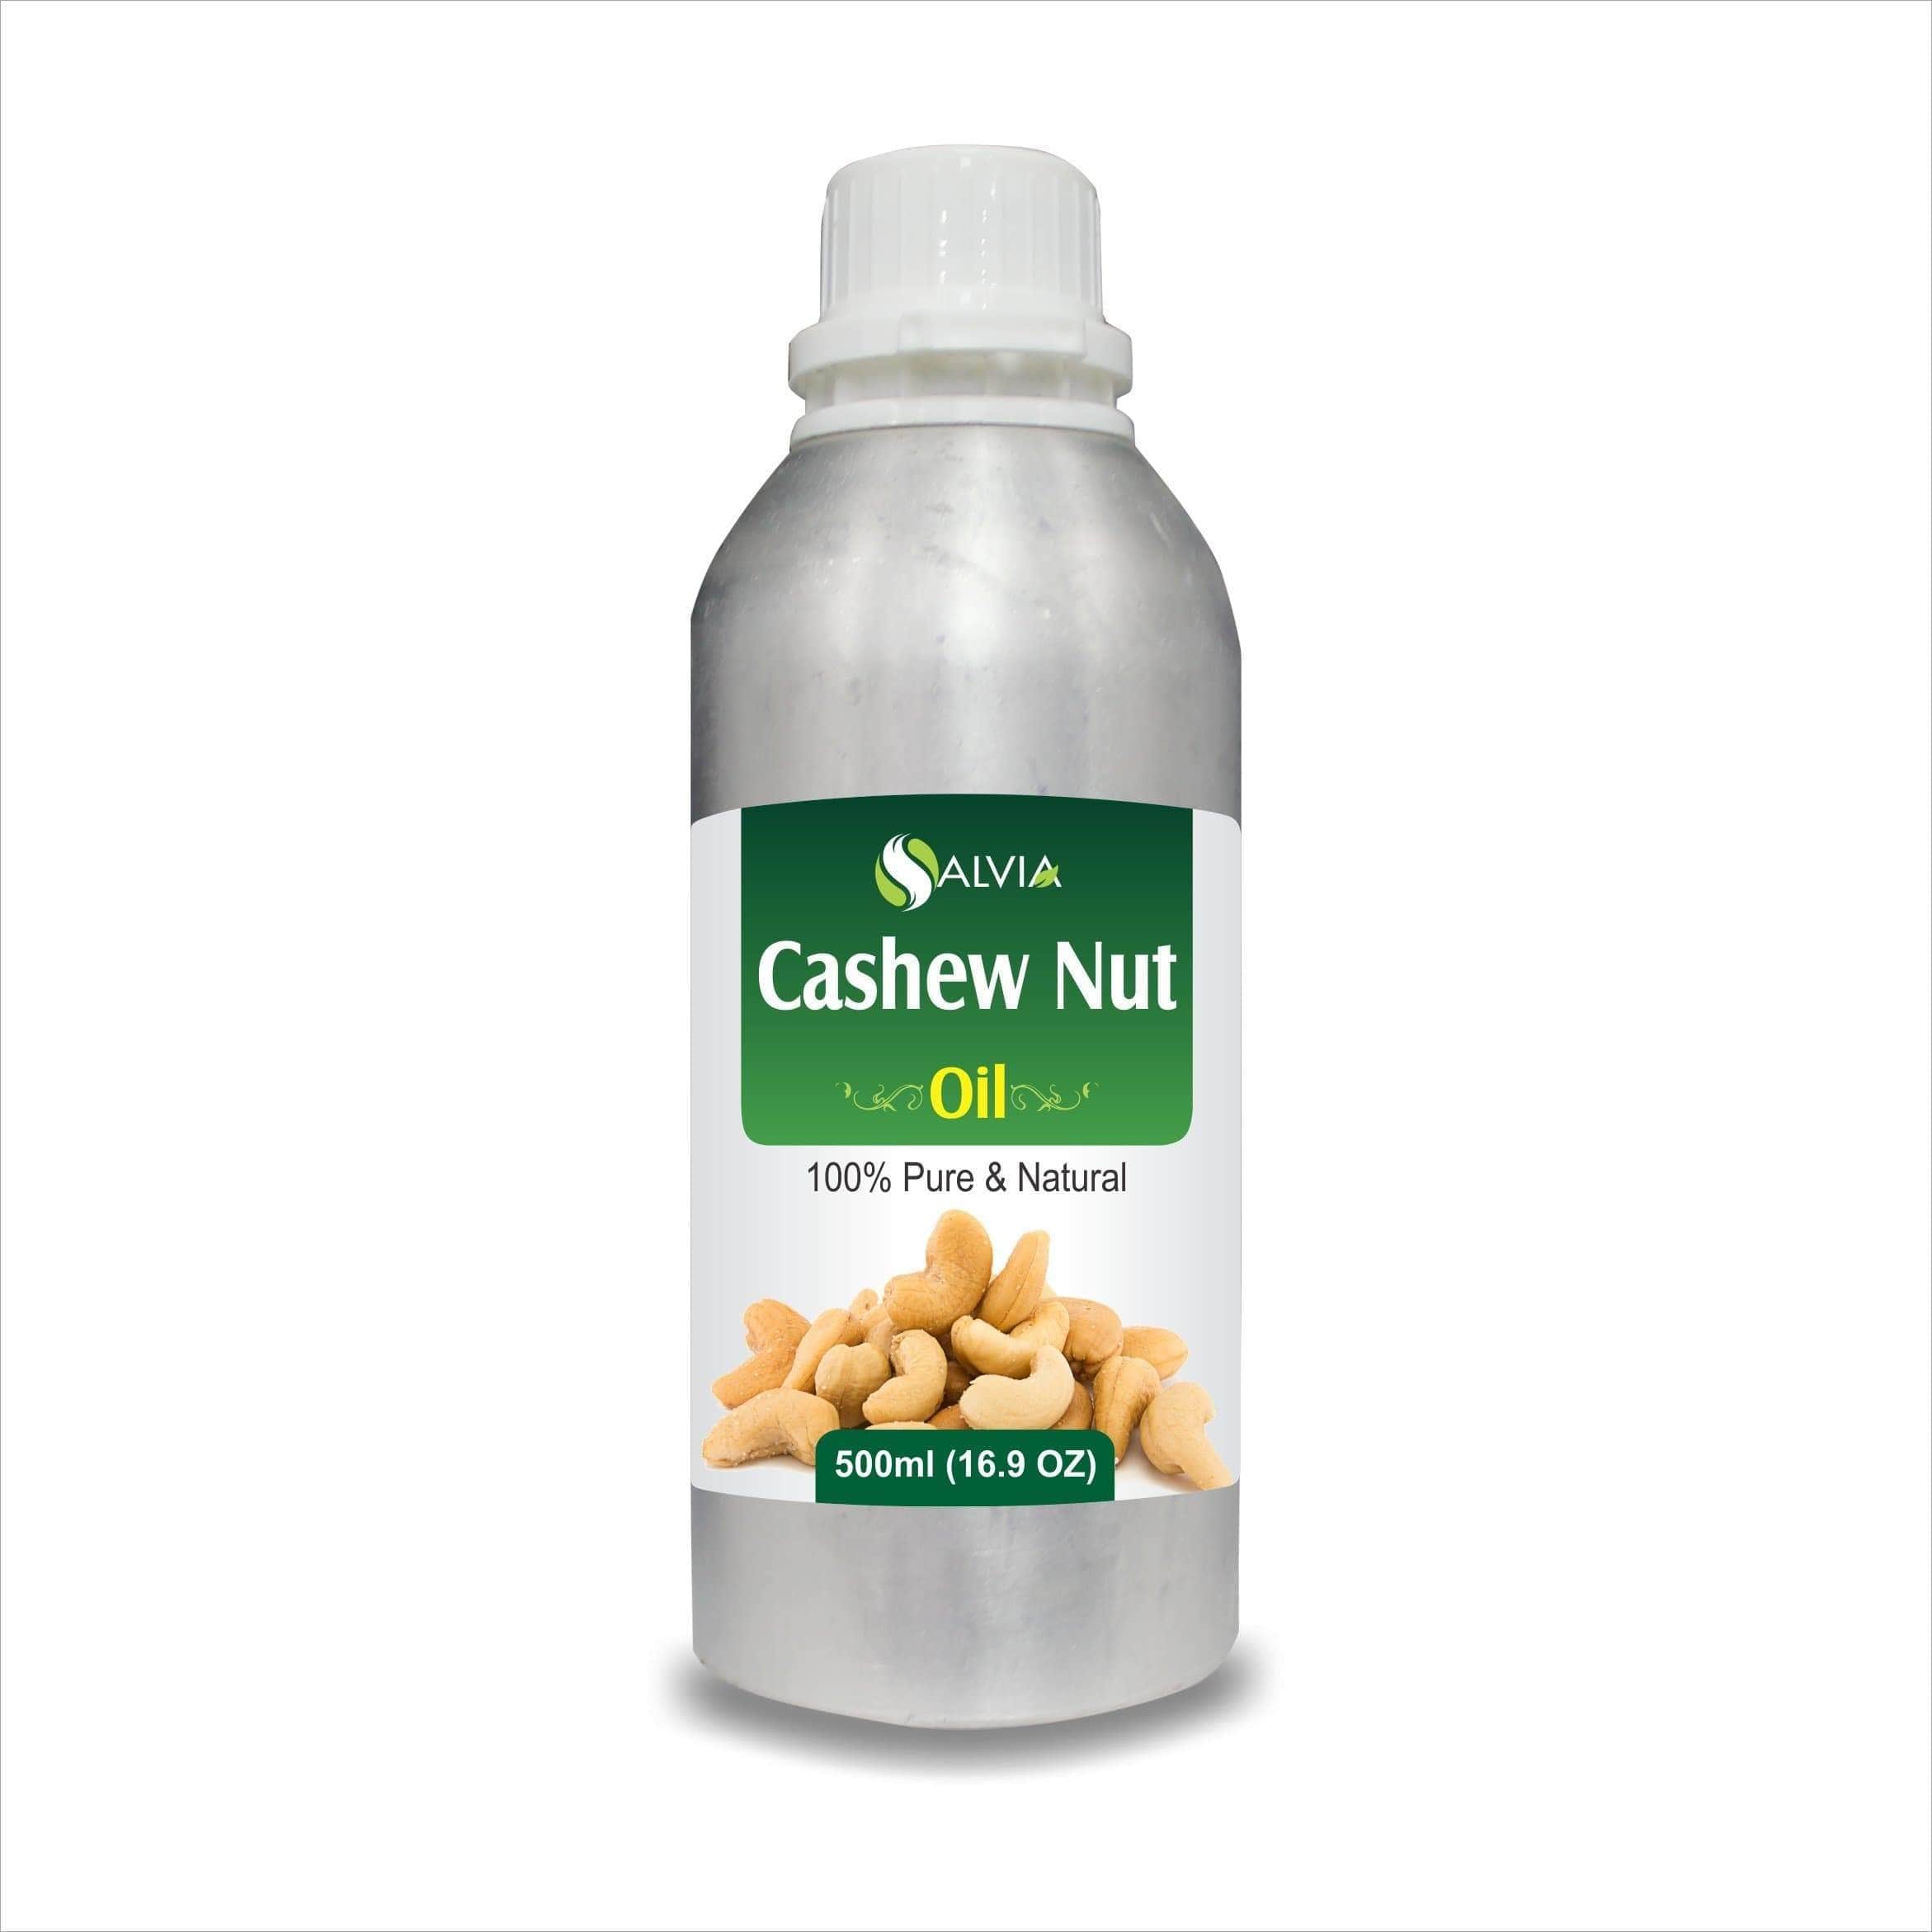 Cashew Nut Oil benefits 